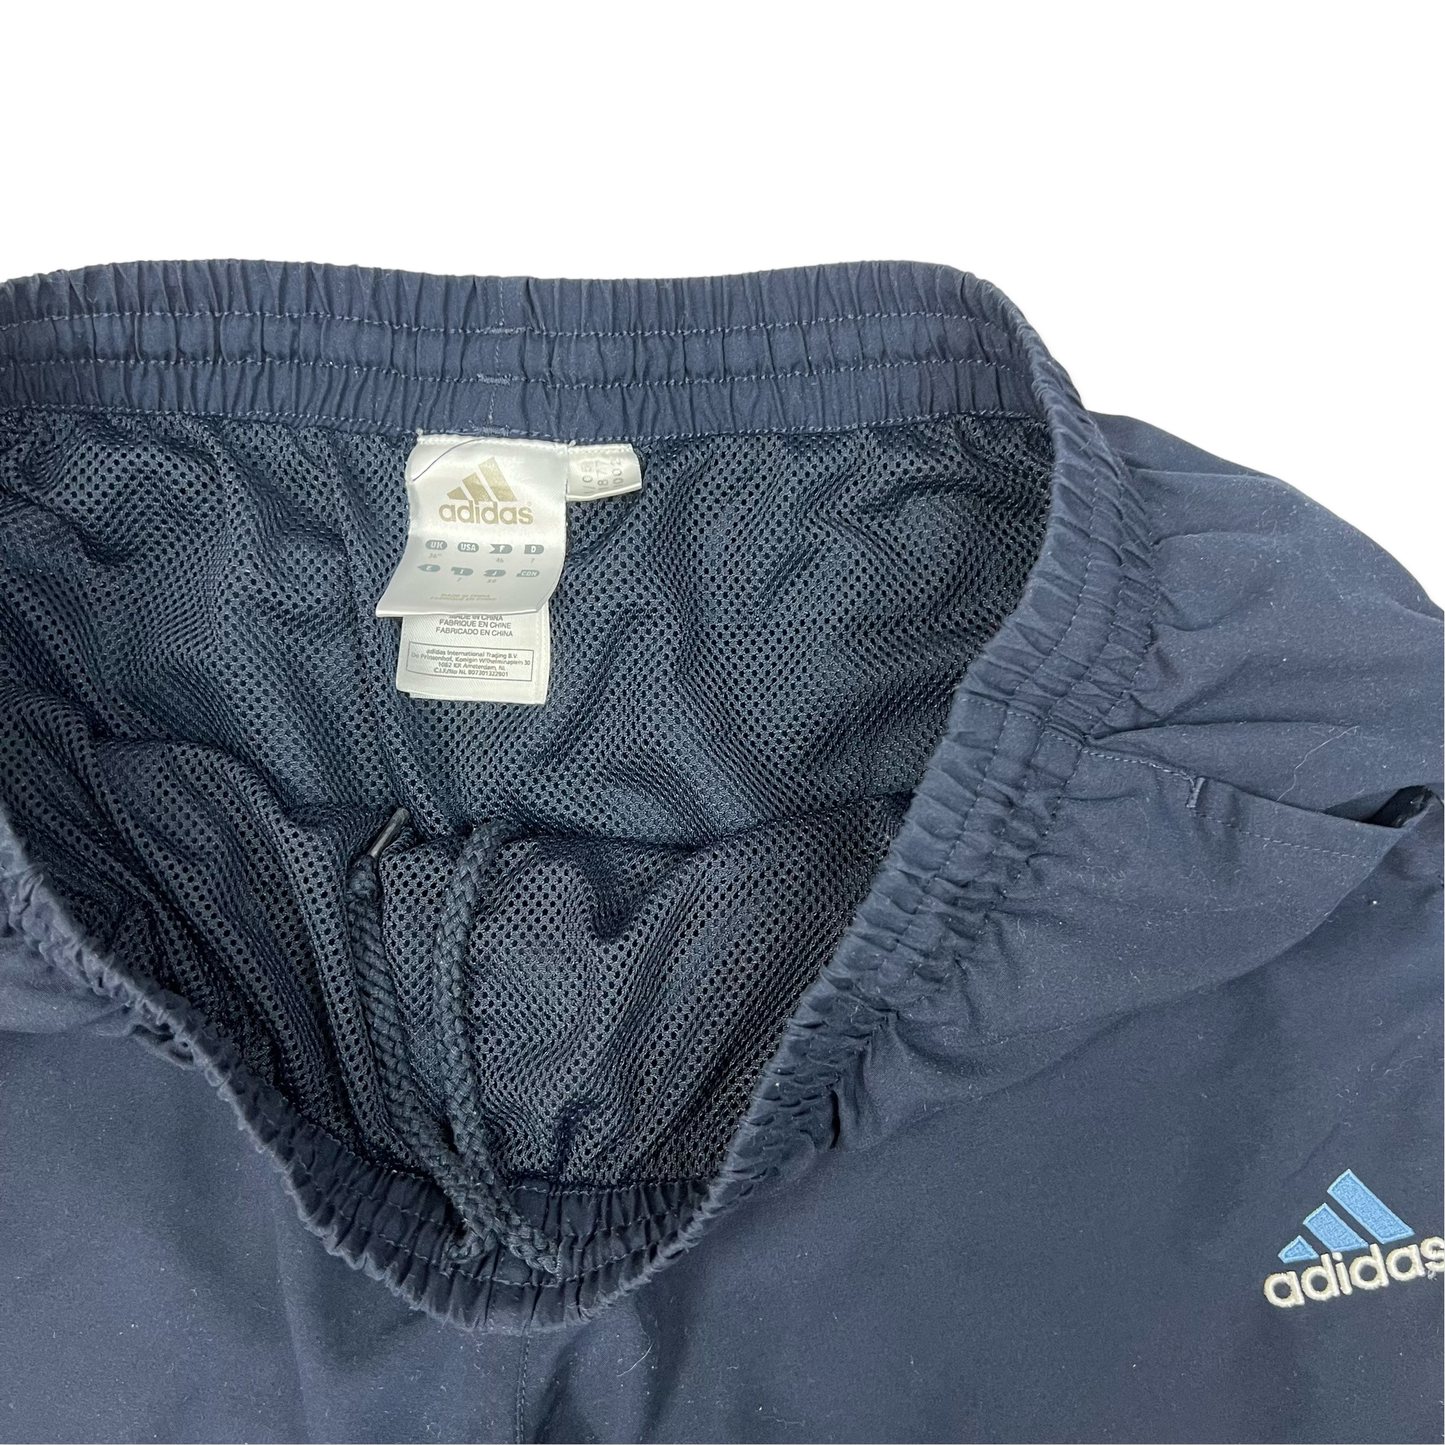 00's Adidas Black & Blue Sport Shorts L